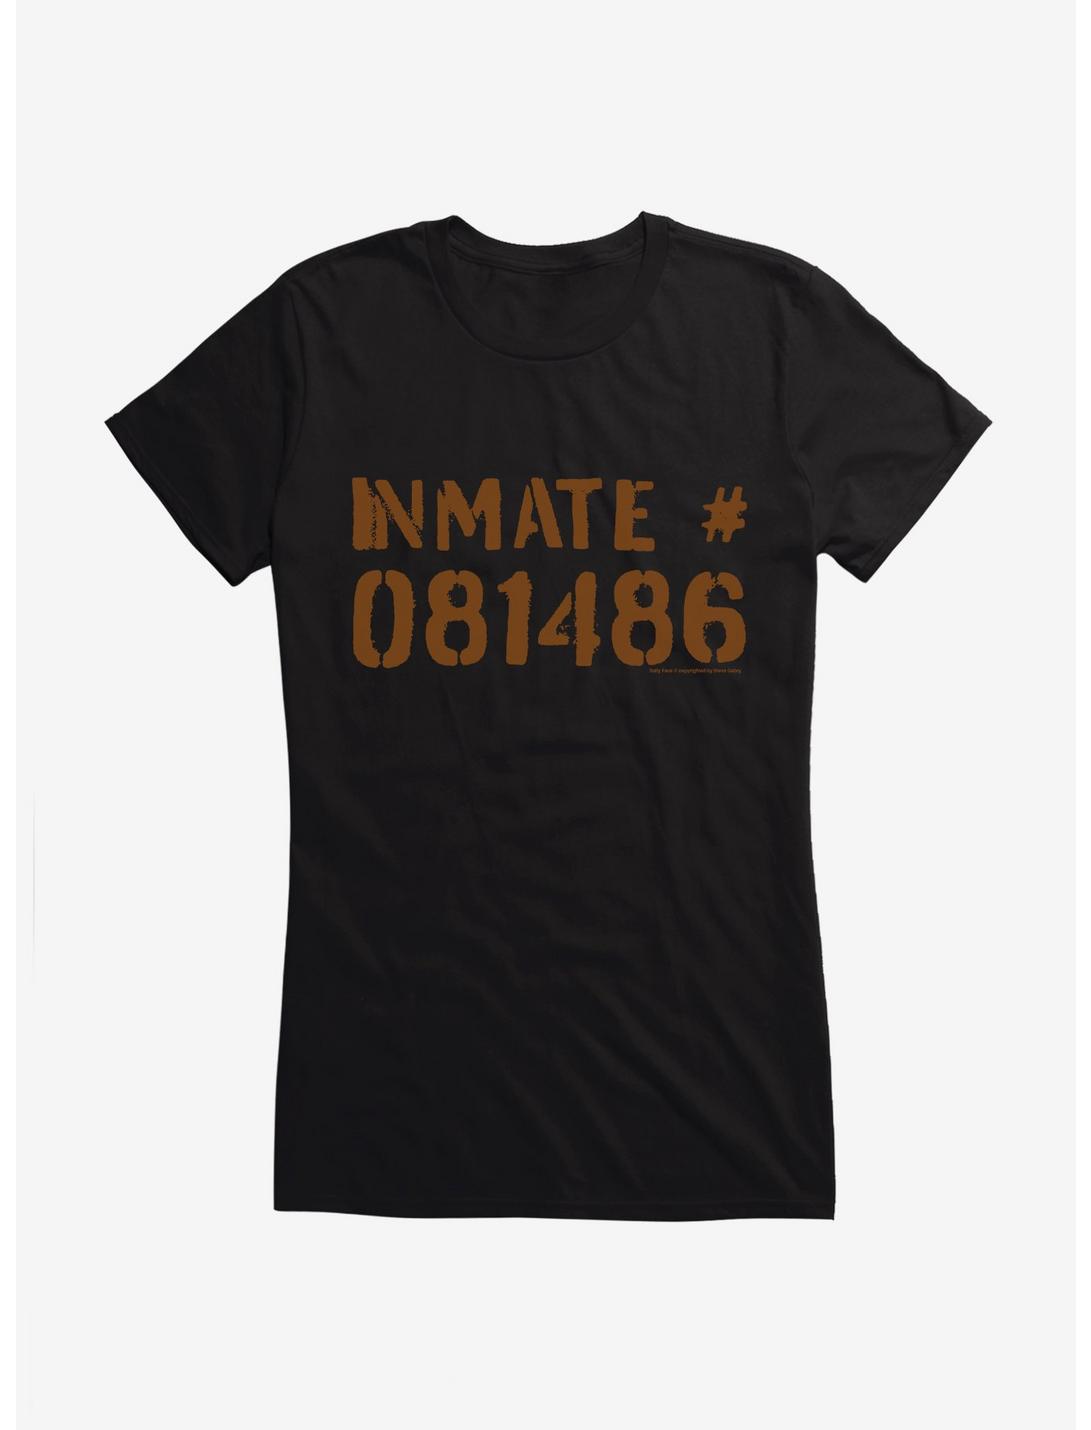 Sally Face Inmate 081486 Girls T-Shirt, BLACK, hi-res